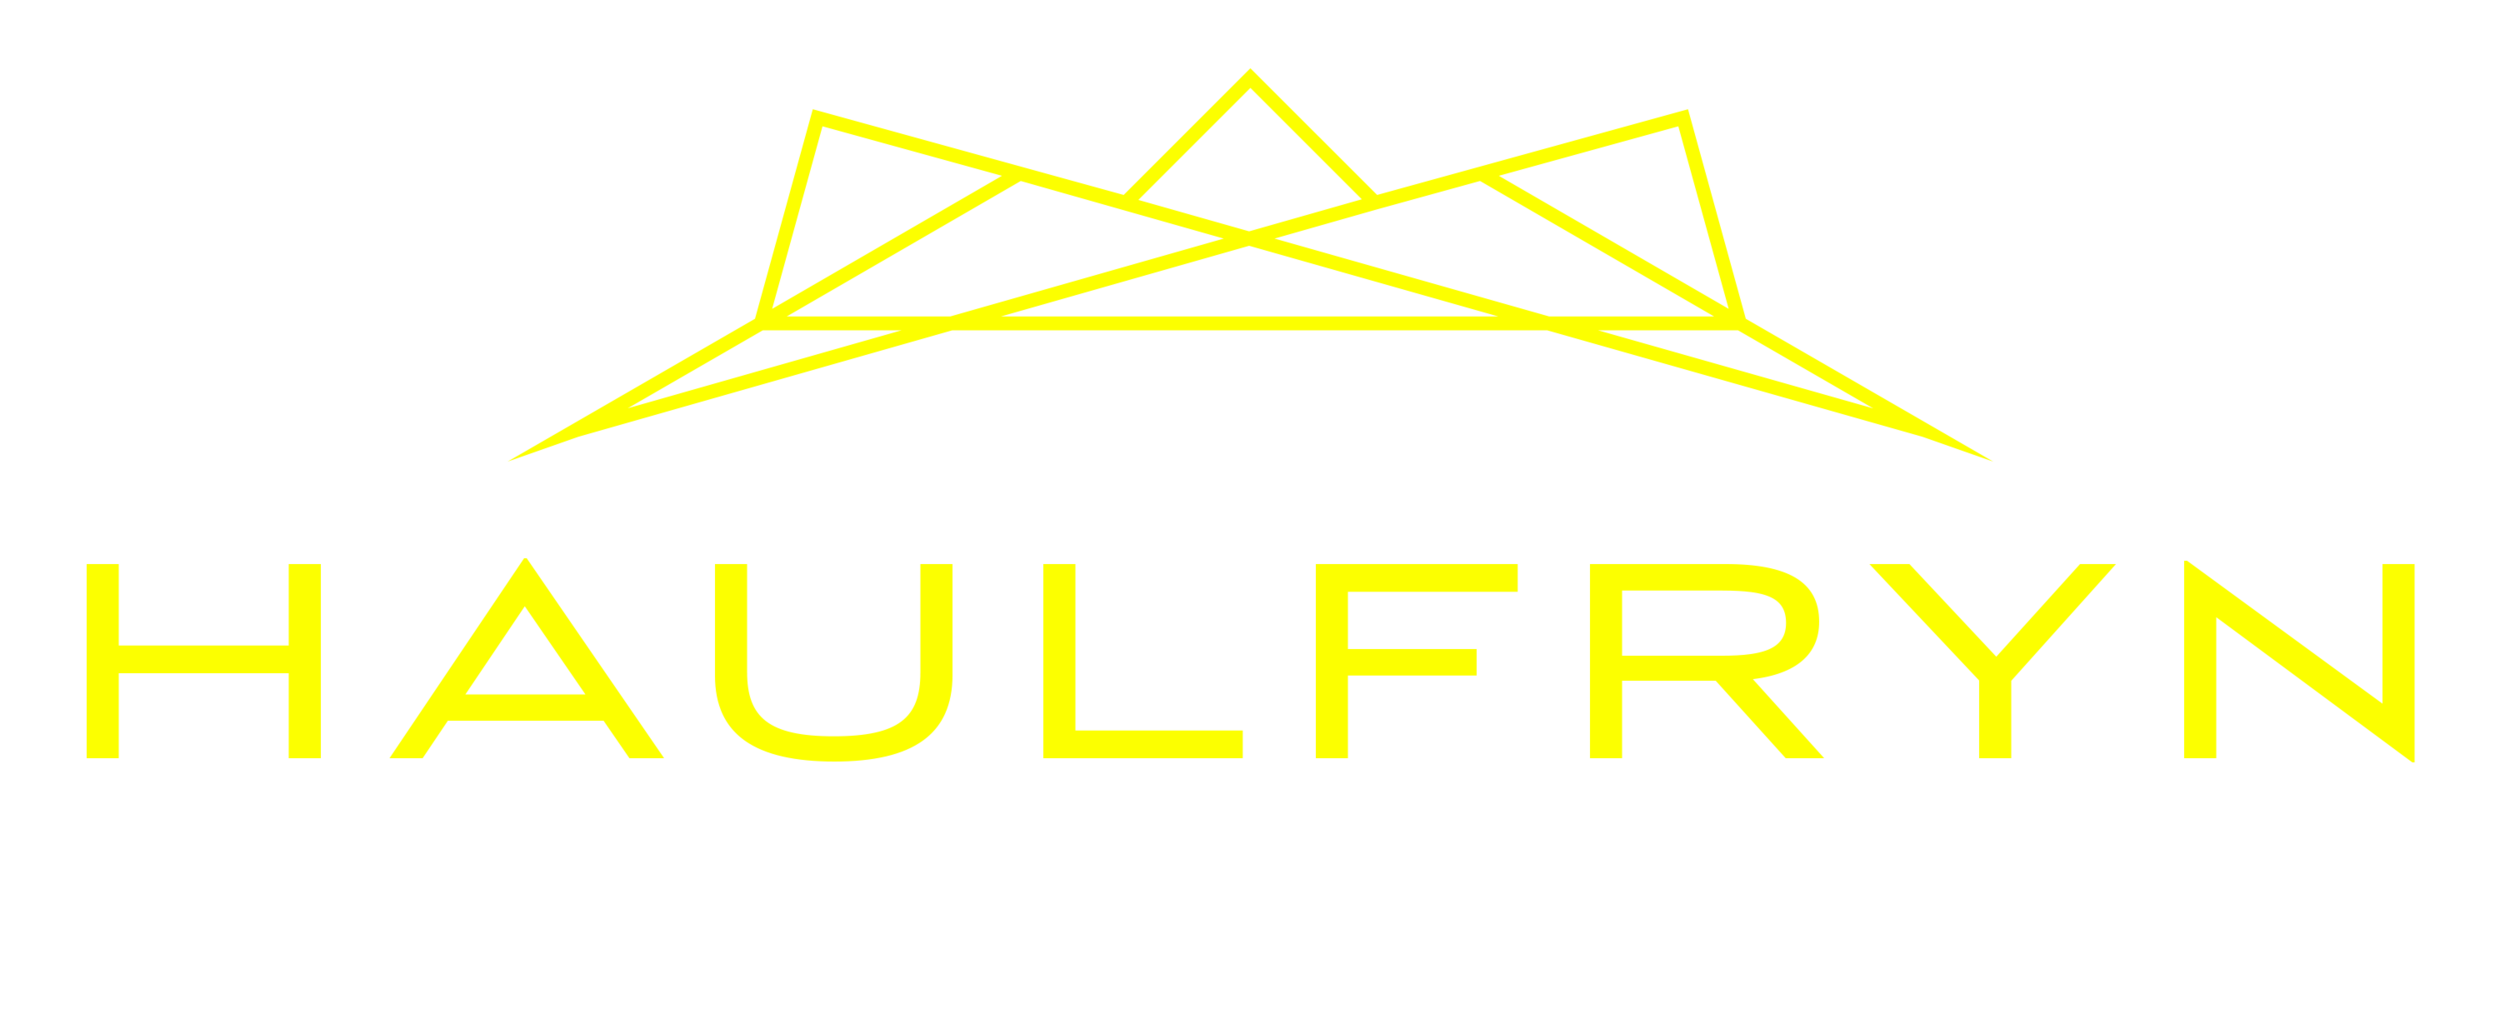 Haulfryn Caravan Park